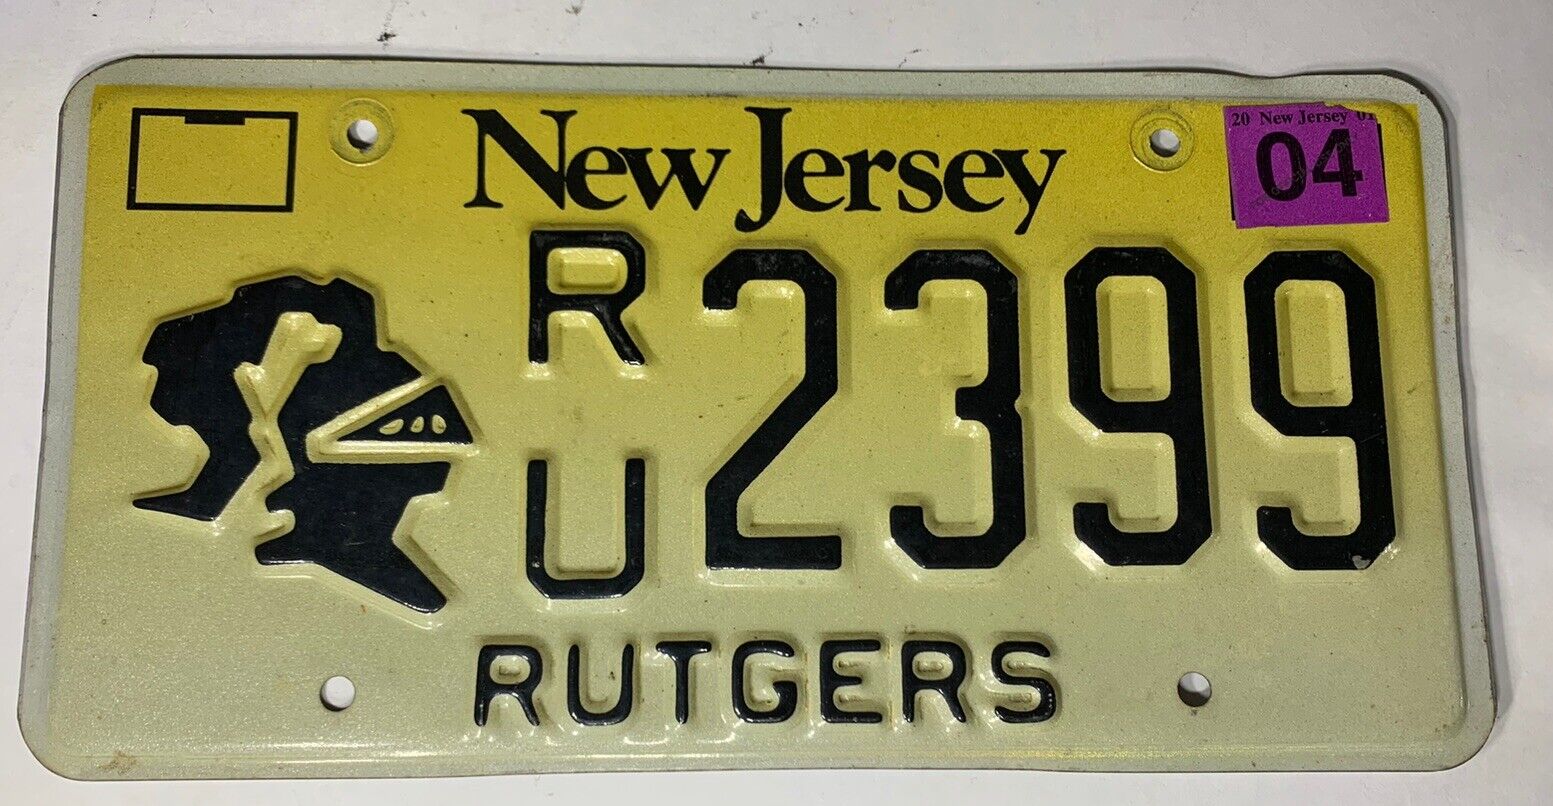 Rare New Jersey License Plate - Rutgers University, Scarlet Knights - RU2399